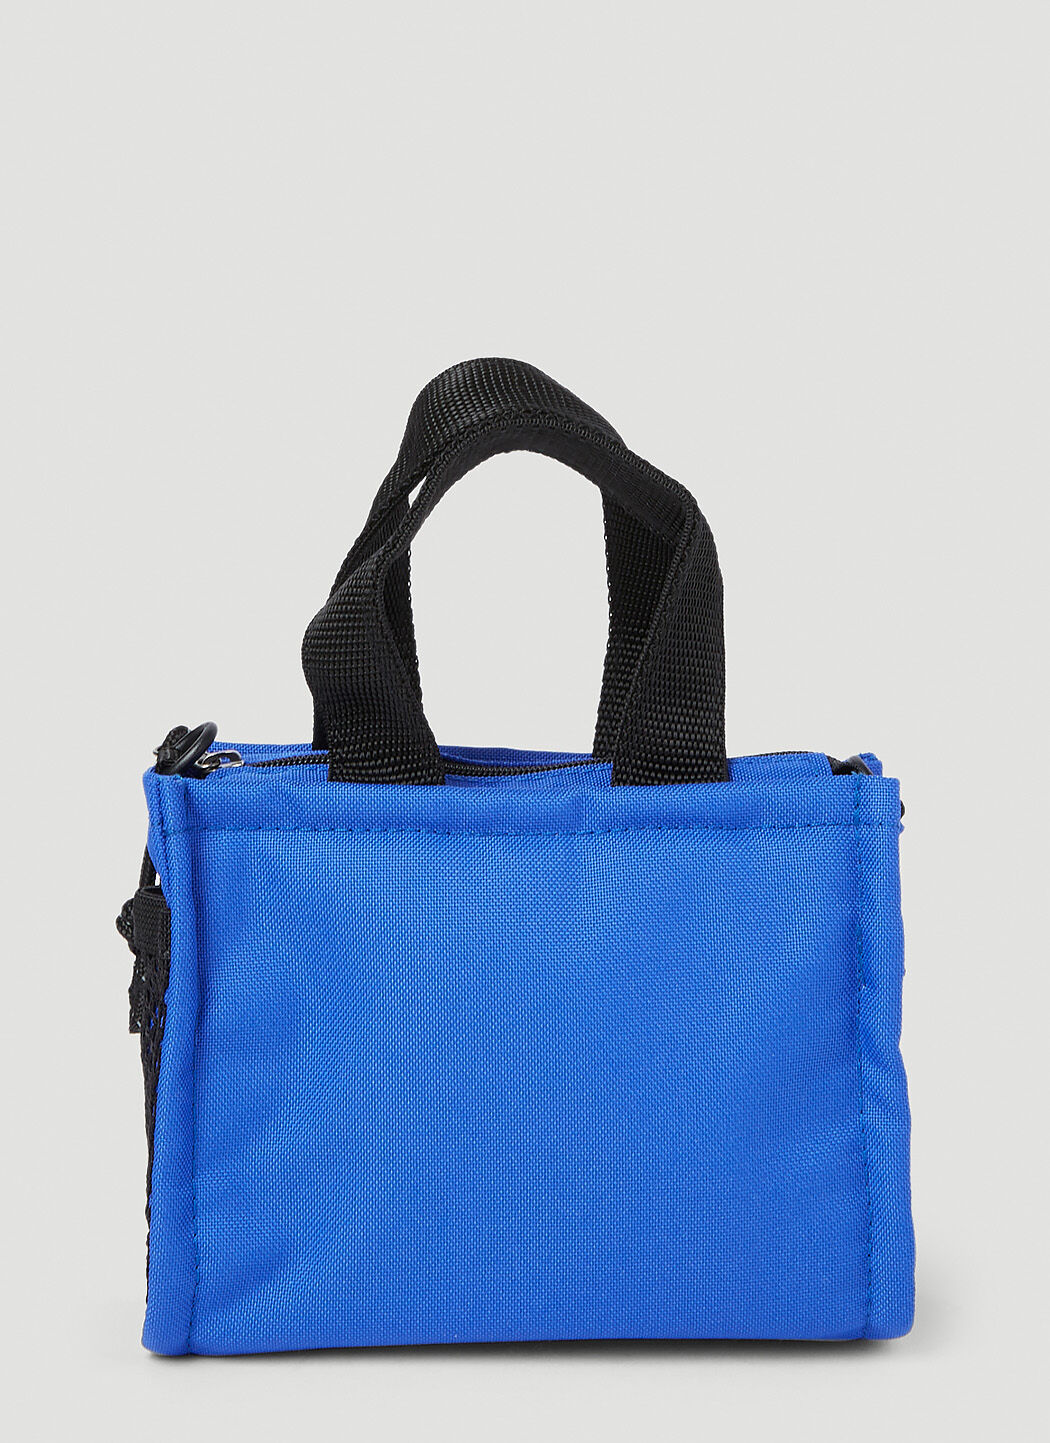 Eastpak x Telfar Shopper Small Crossbody Bag | LN-CC